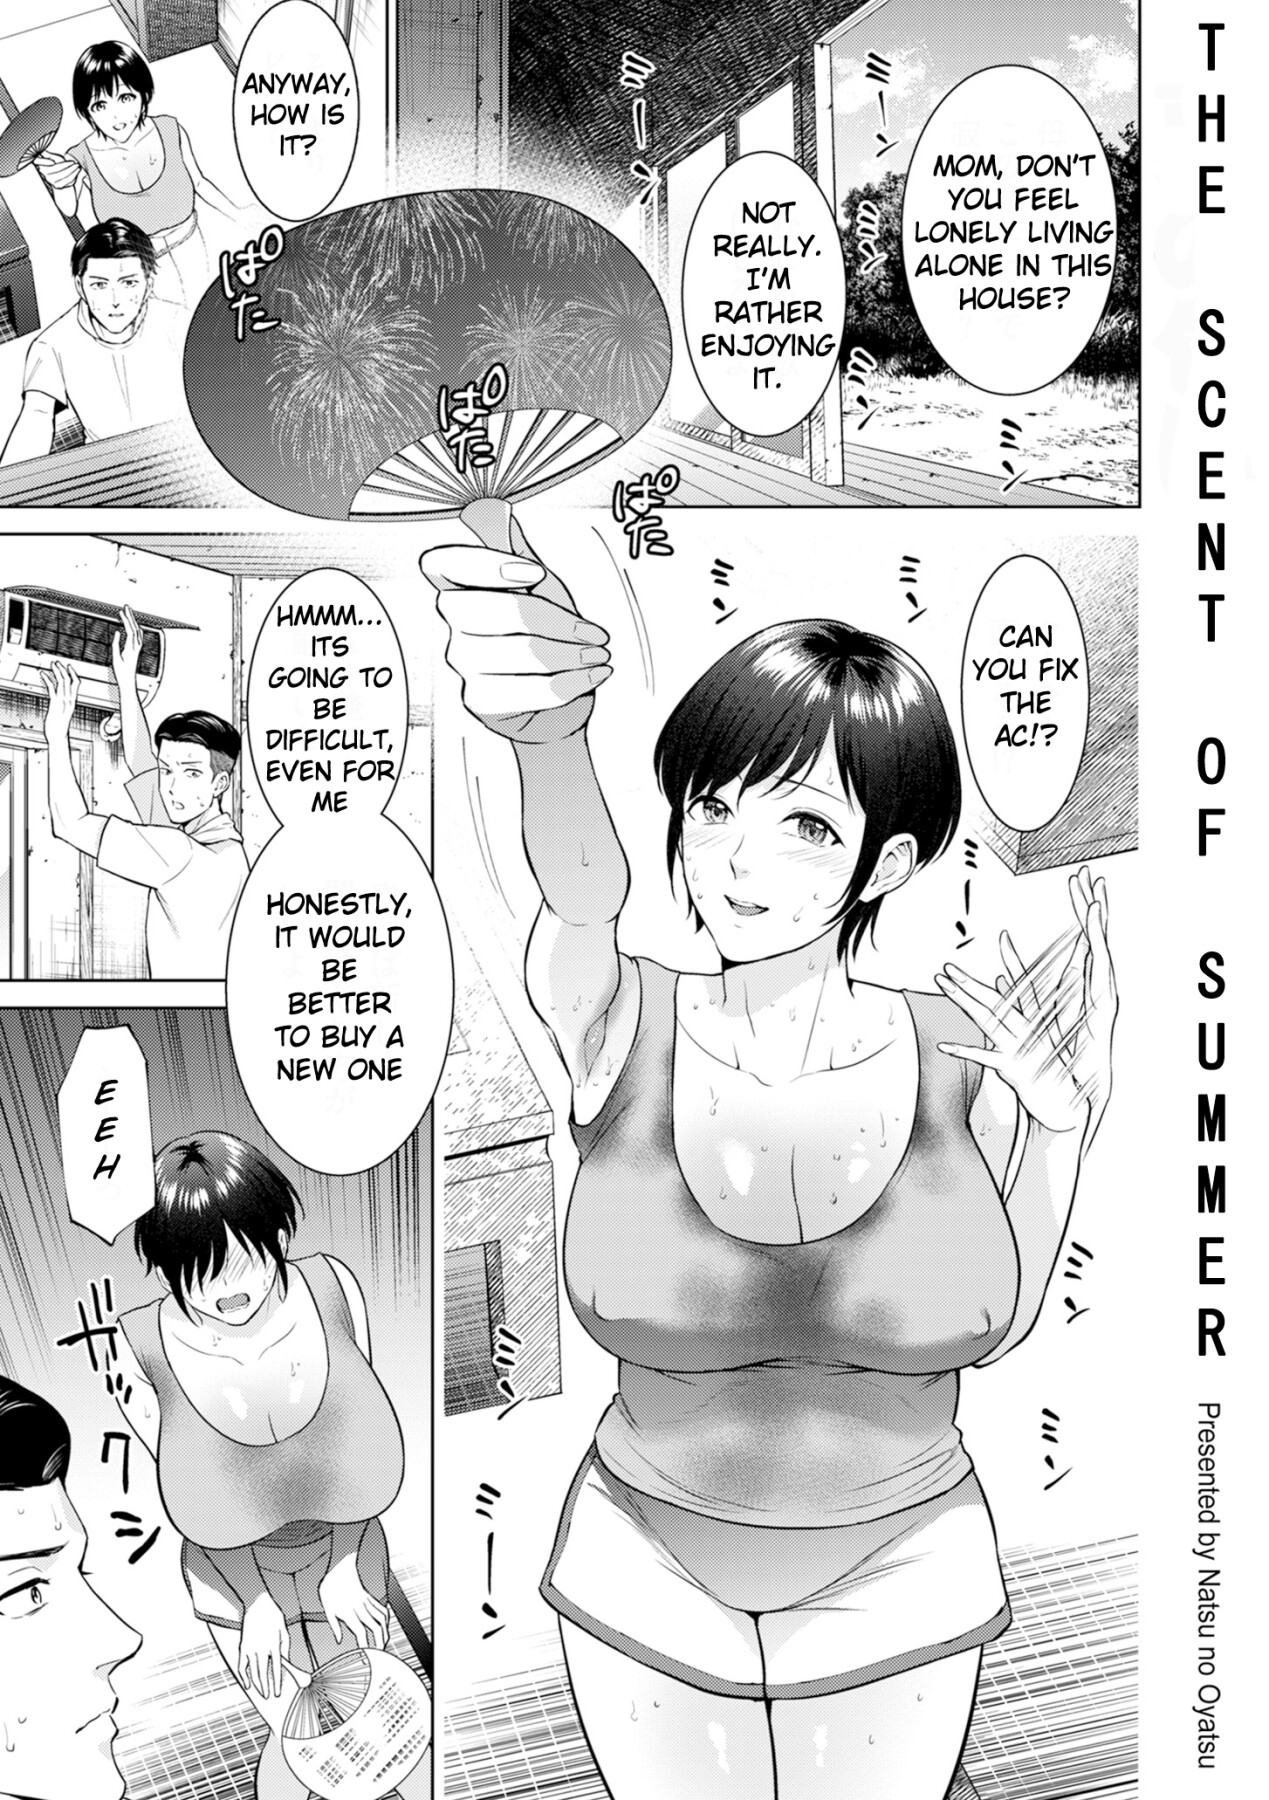 Hentai Manga Comic-The Scent of Summer-Read-1